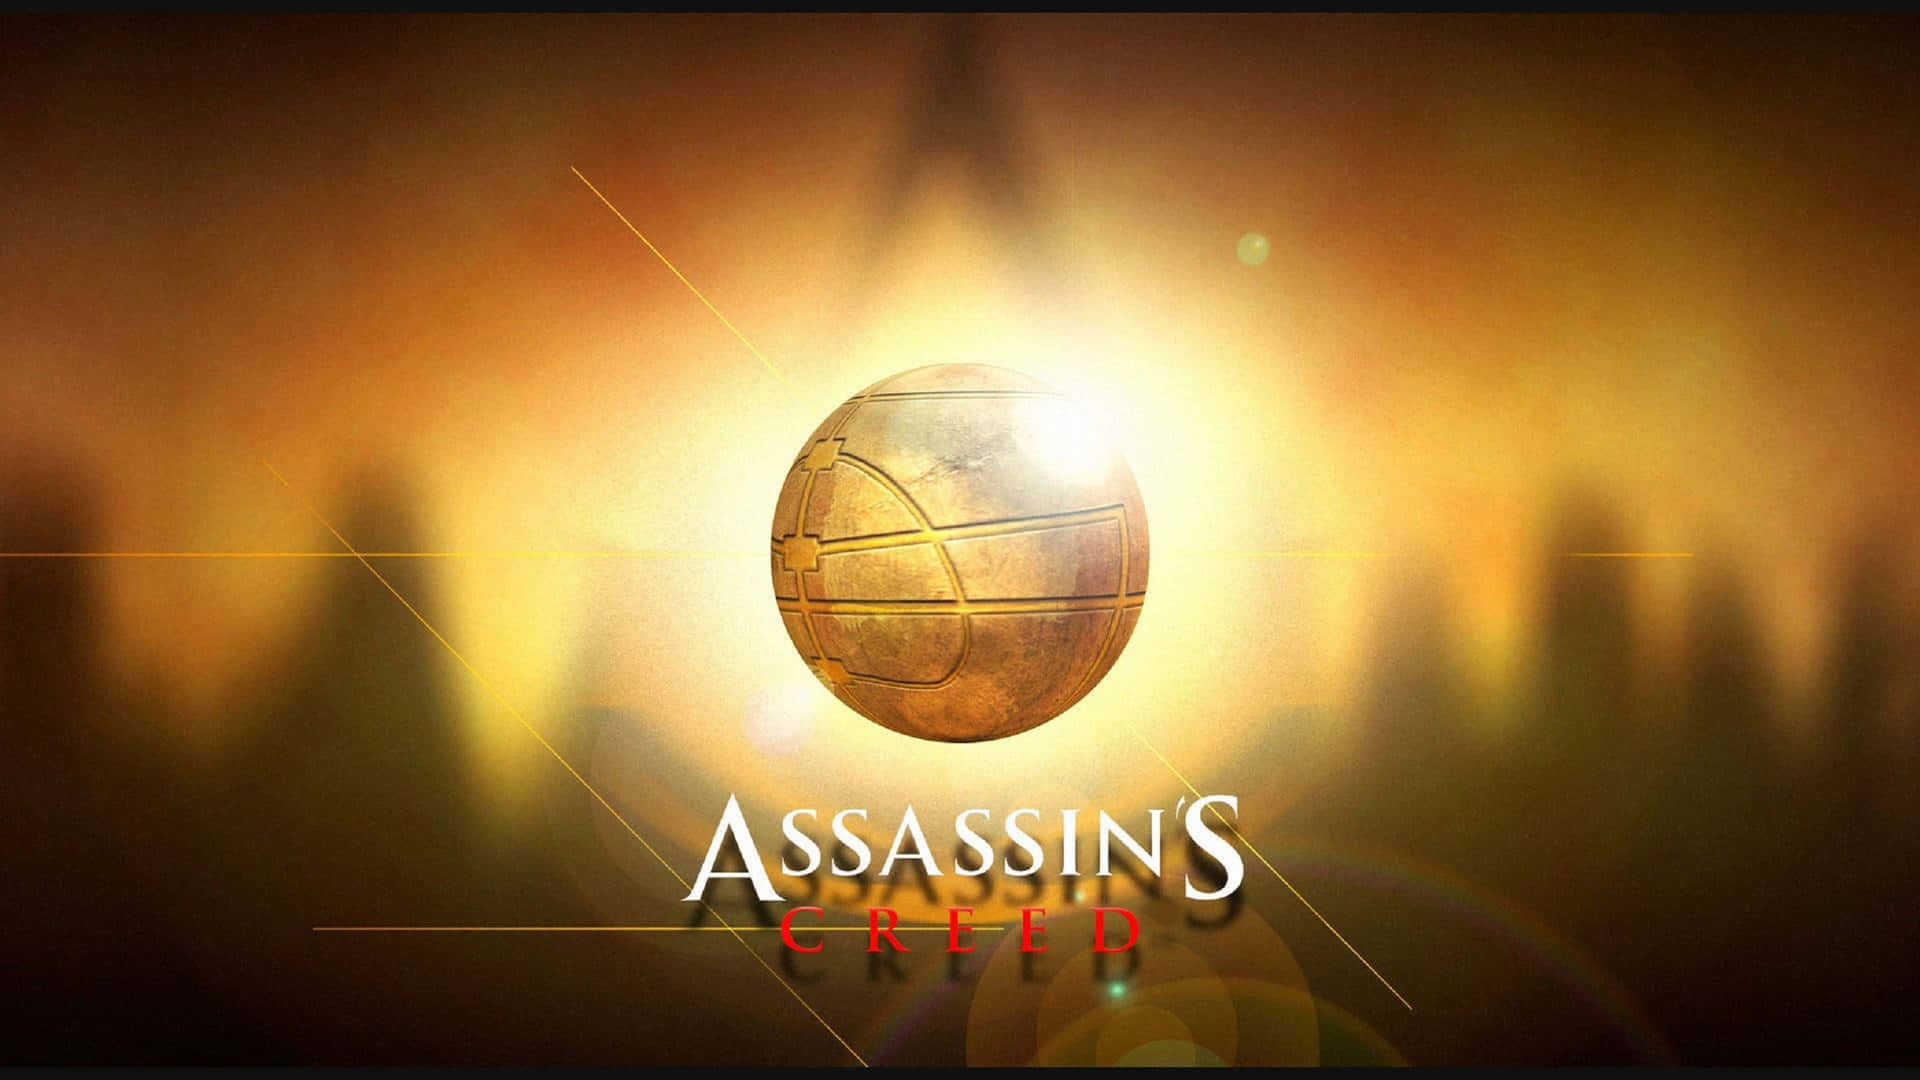 Assassin's Creed - Hd Wallpaper